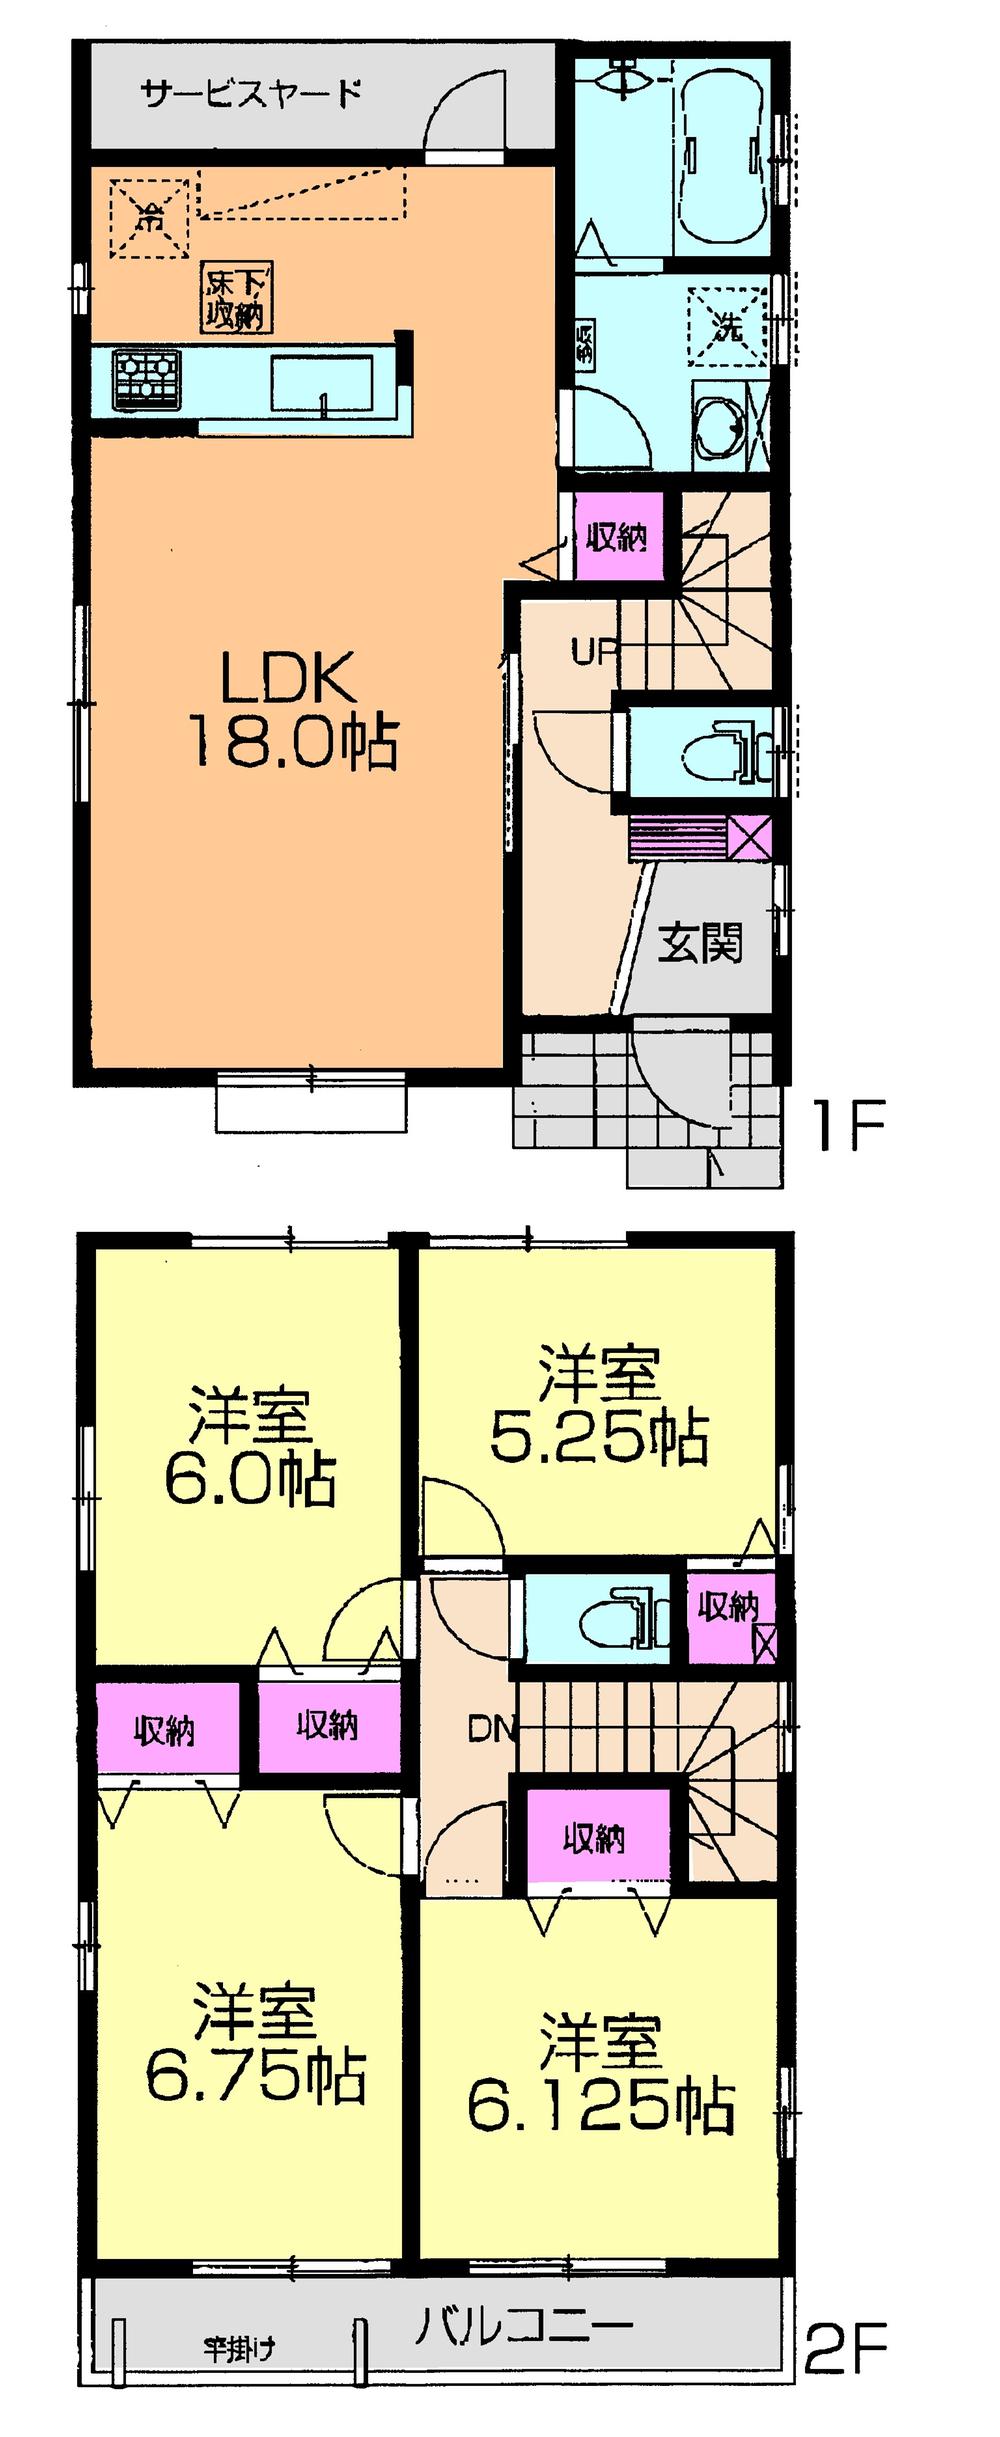 Floor plan. (3 Building), Price 31,800,000 yen, 4LDK, Land area 129.98 sq m , Building area 97.5 sq m